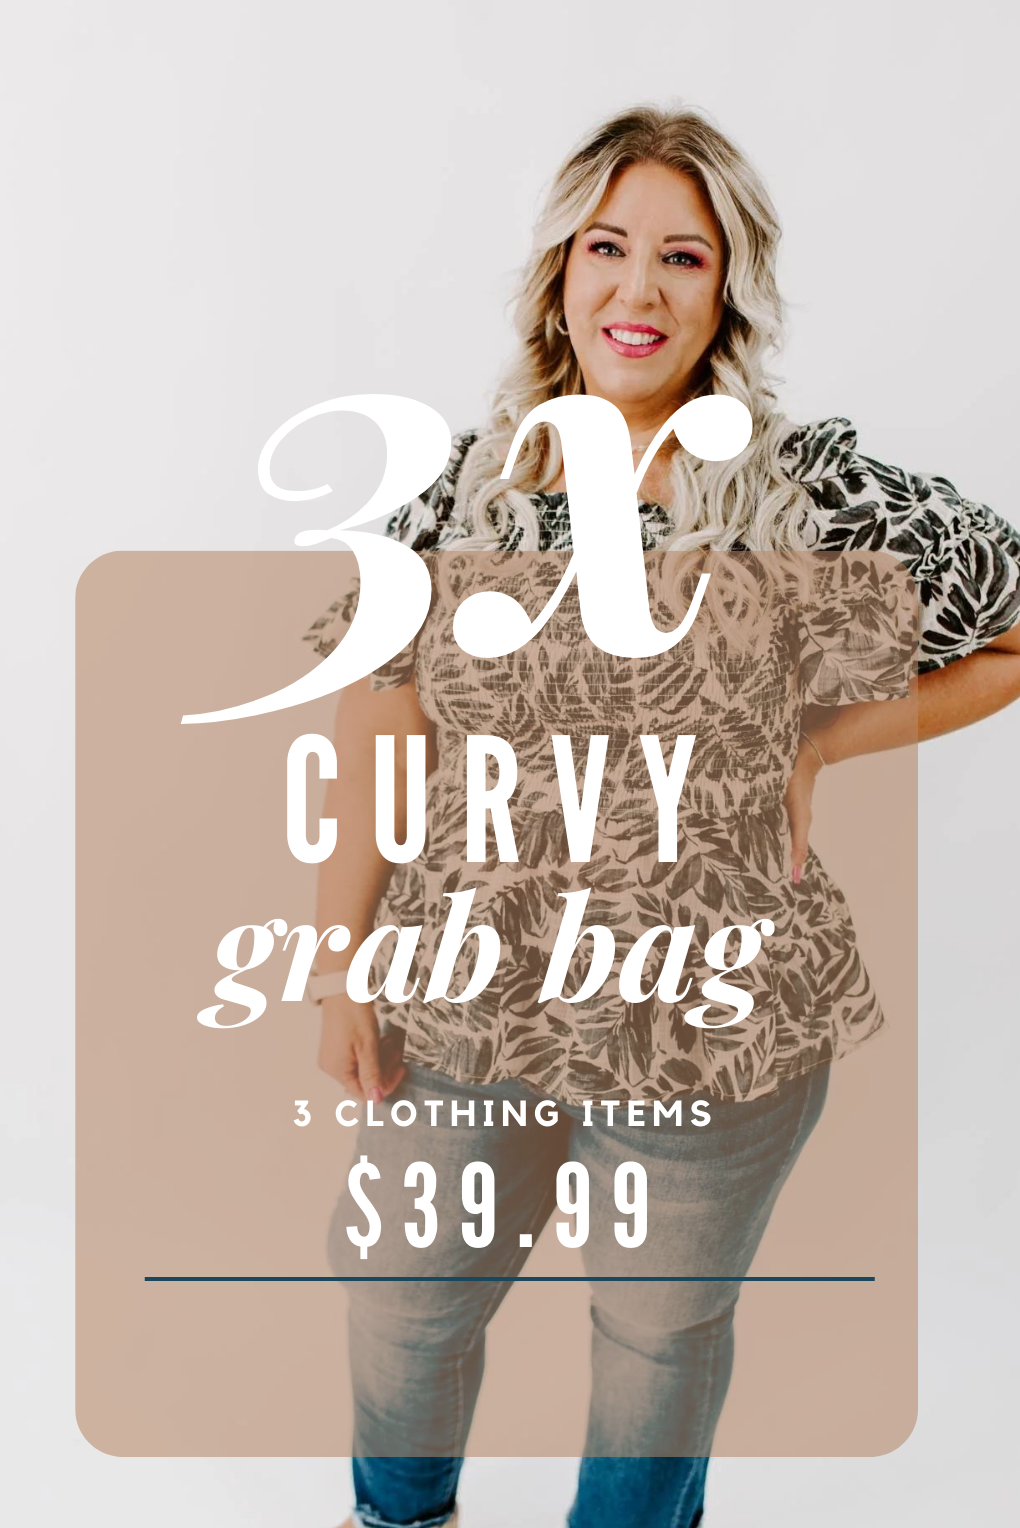 Curvy Grab Bag Deal - 3 for $39.99